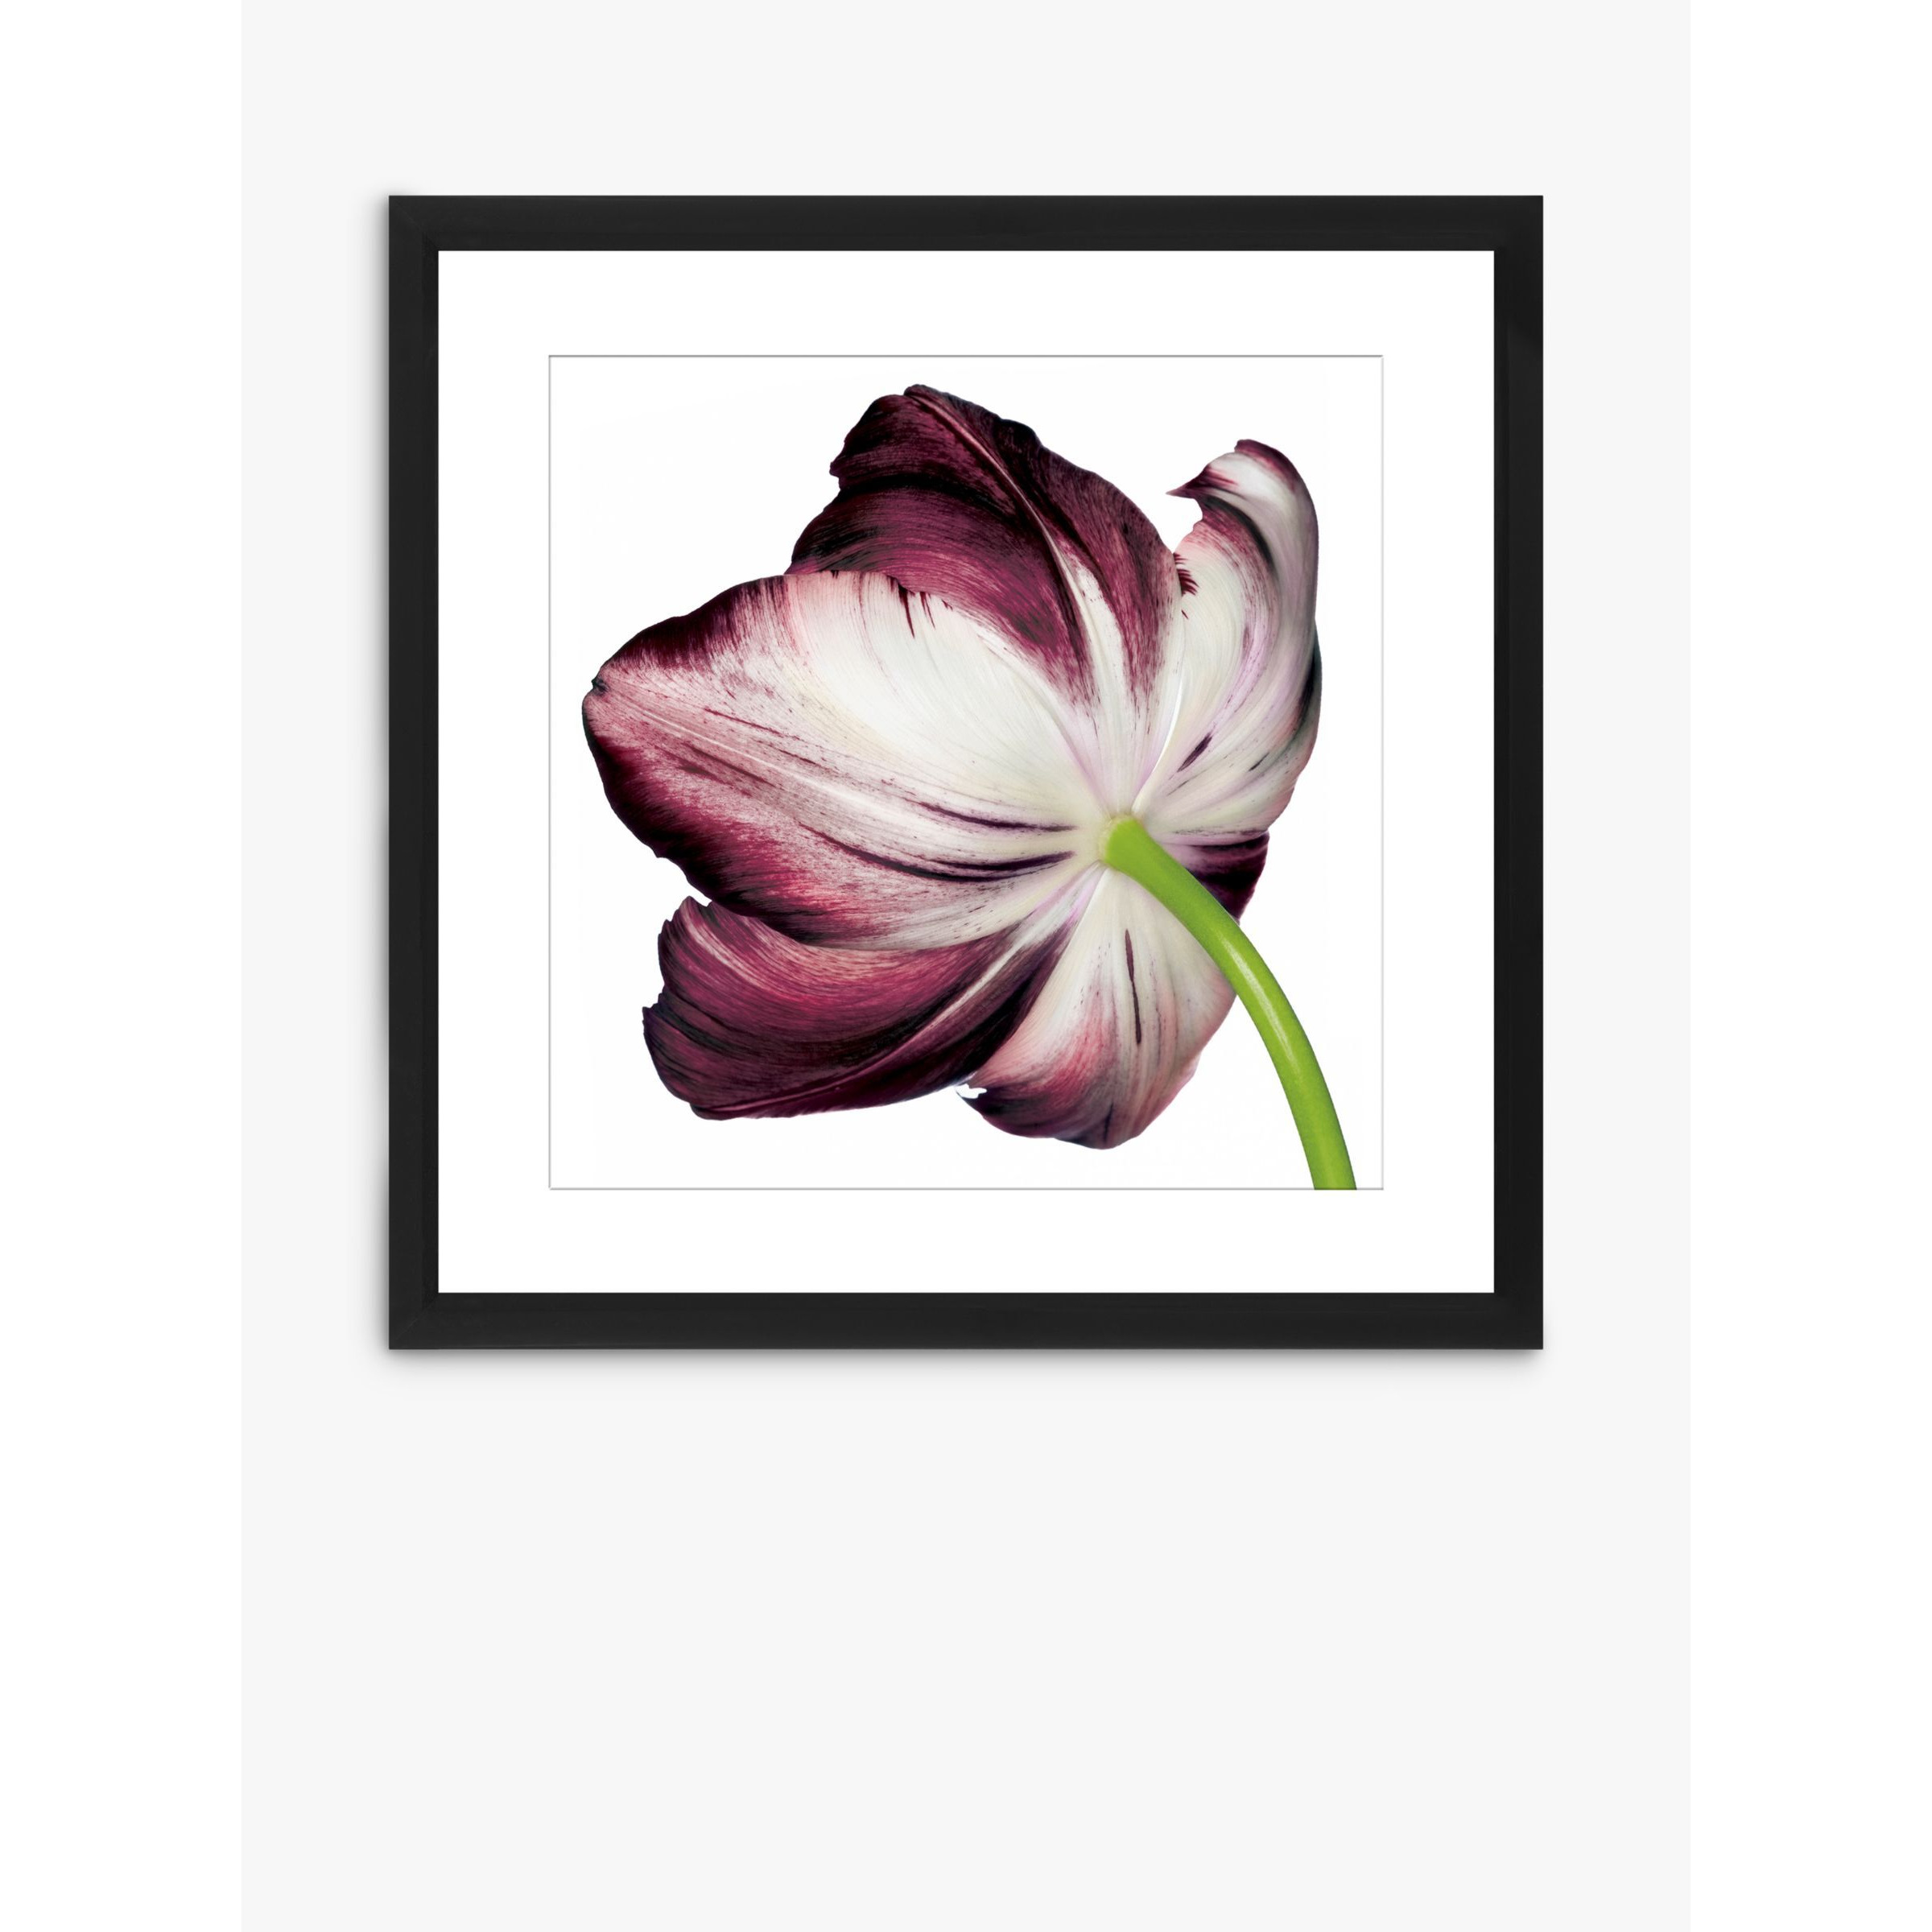 Burgundy Tulip 4 - Framed Print & Mount, 56 x 56cm, Burgundy - image 1